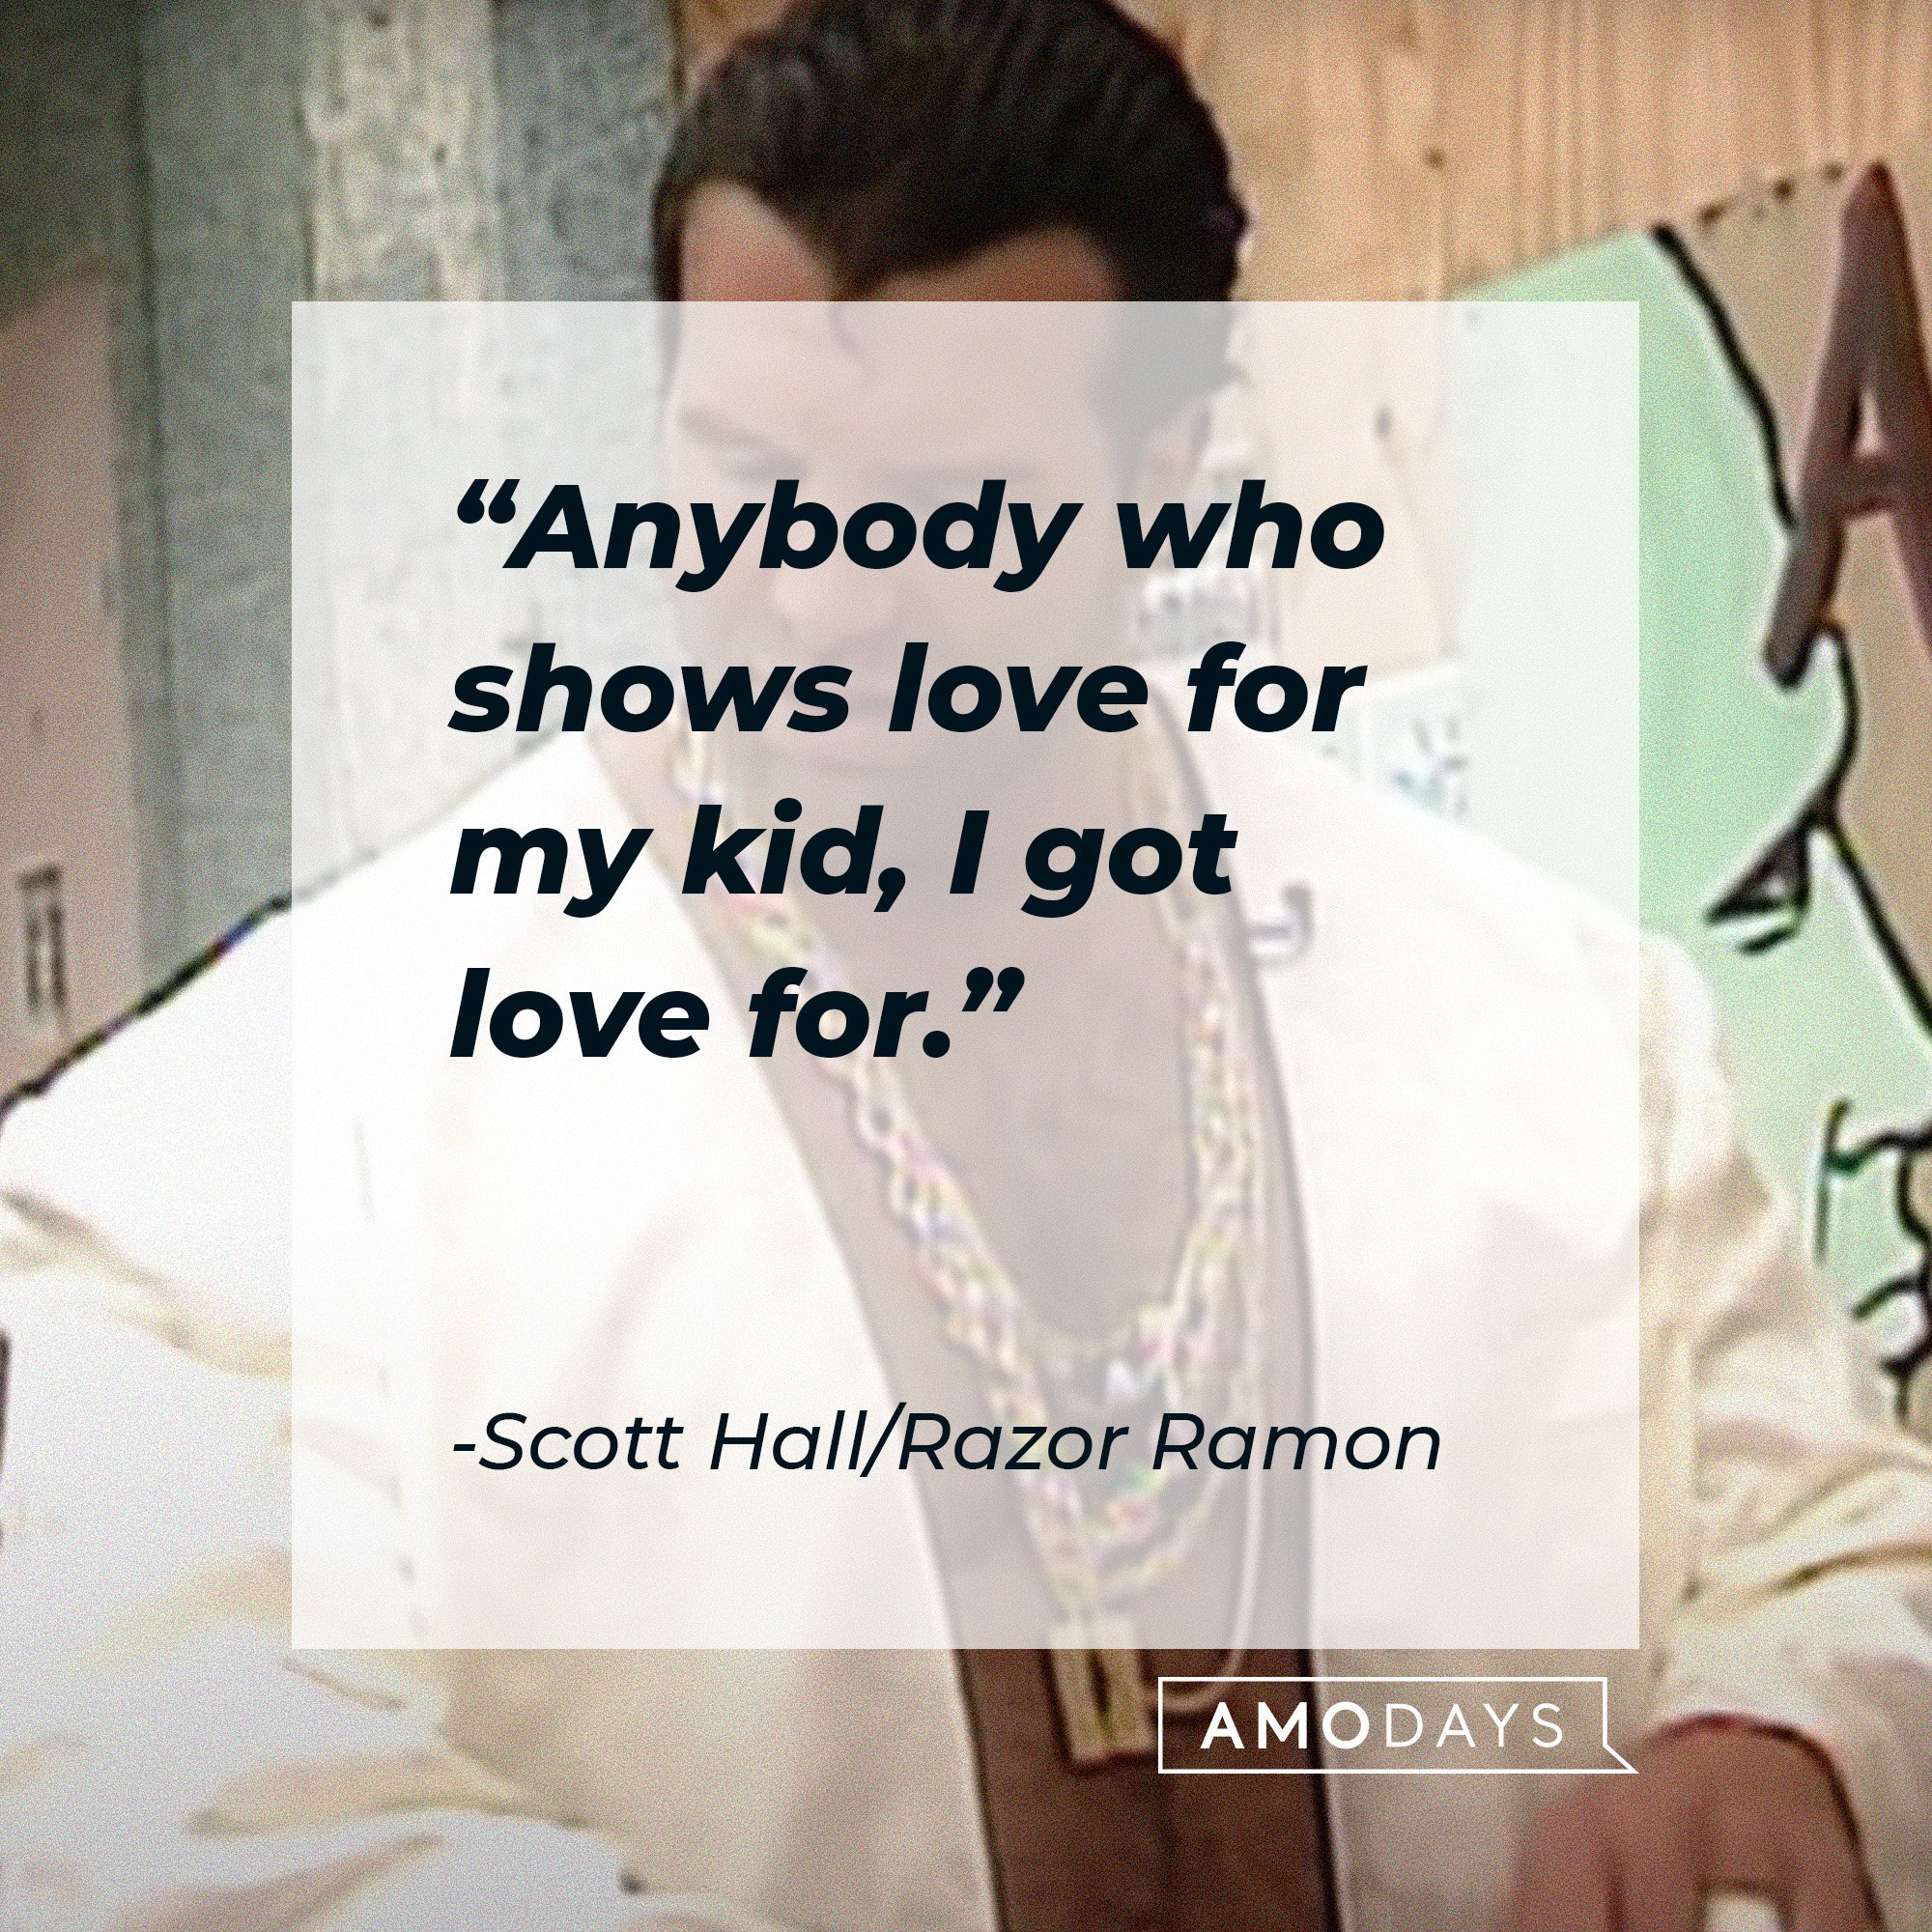 Scott Hall/Razor Ramon’s quote: "Anybody who shows love for my kid, I got love for." | Image: AmoDays